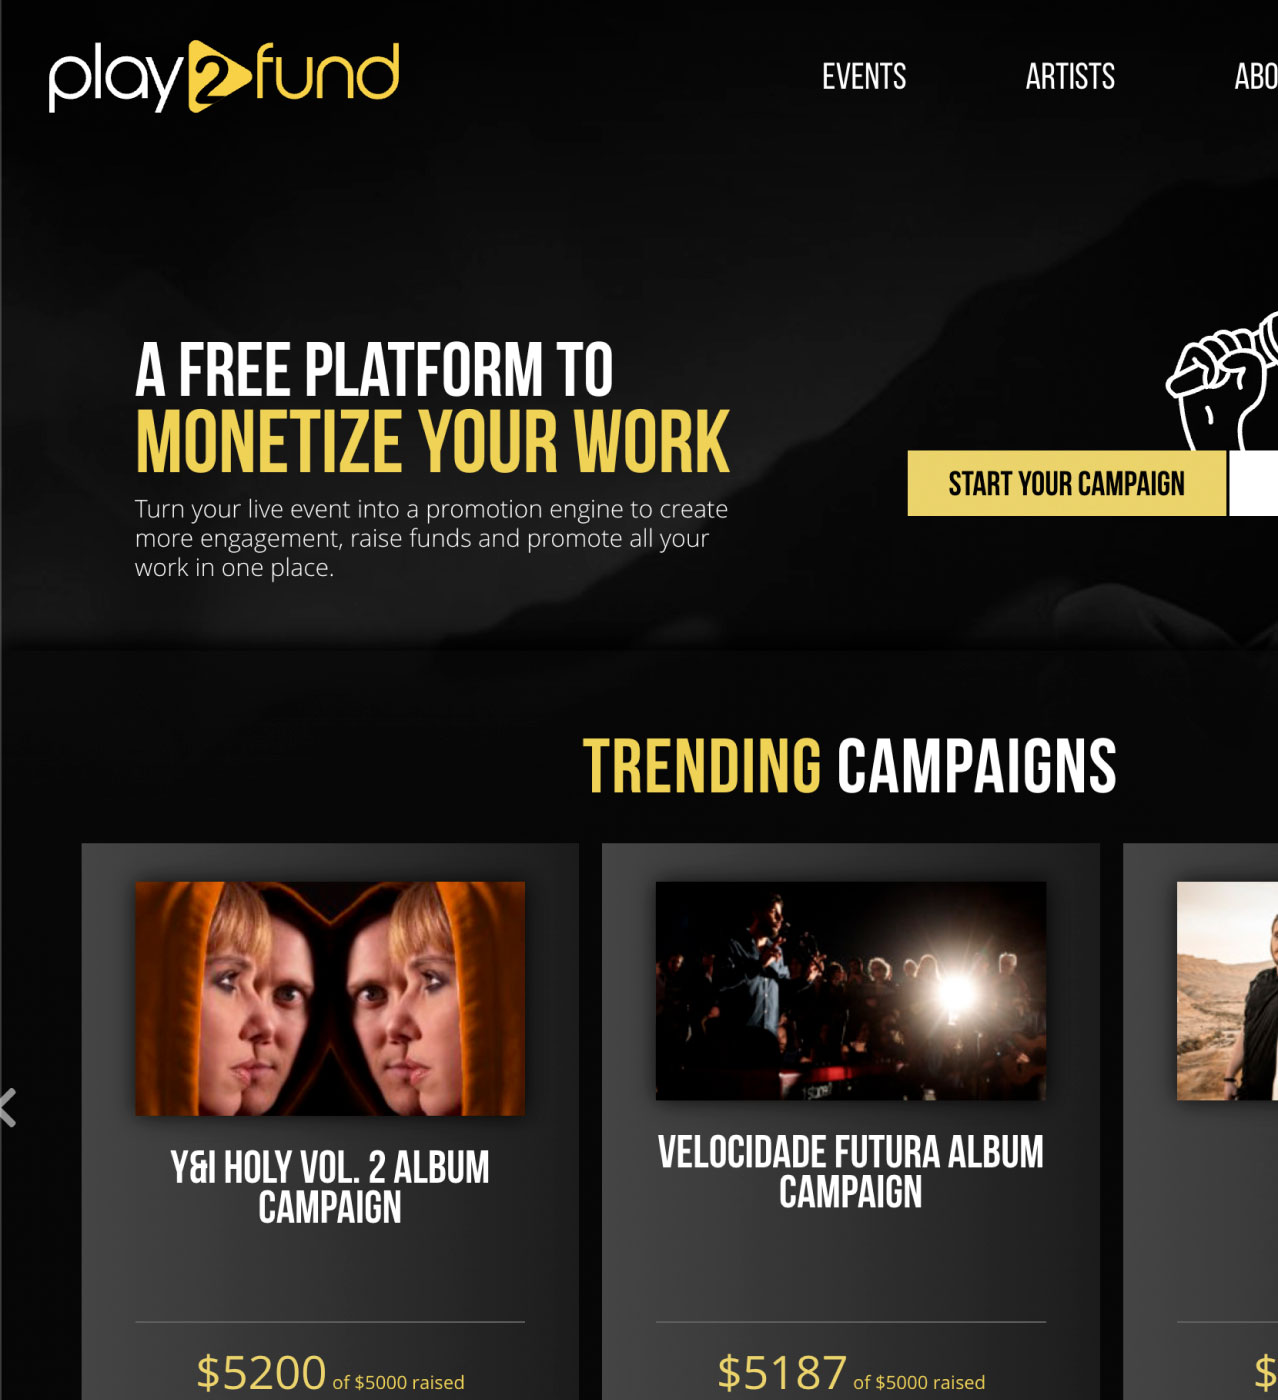 Play2fund website screenshot